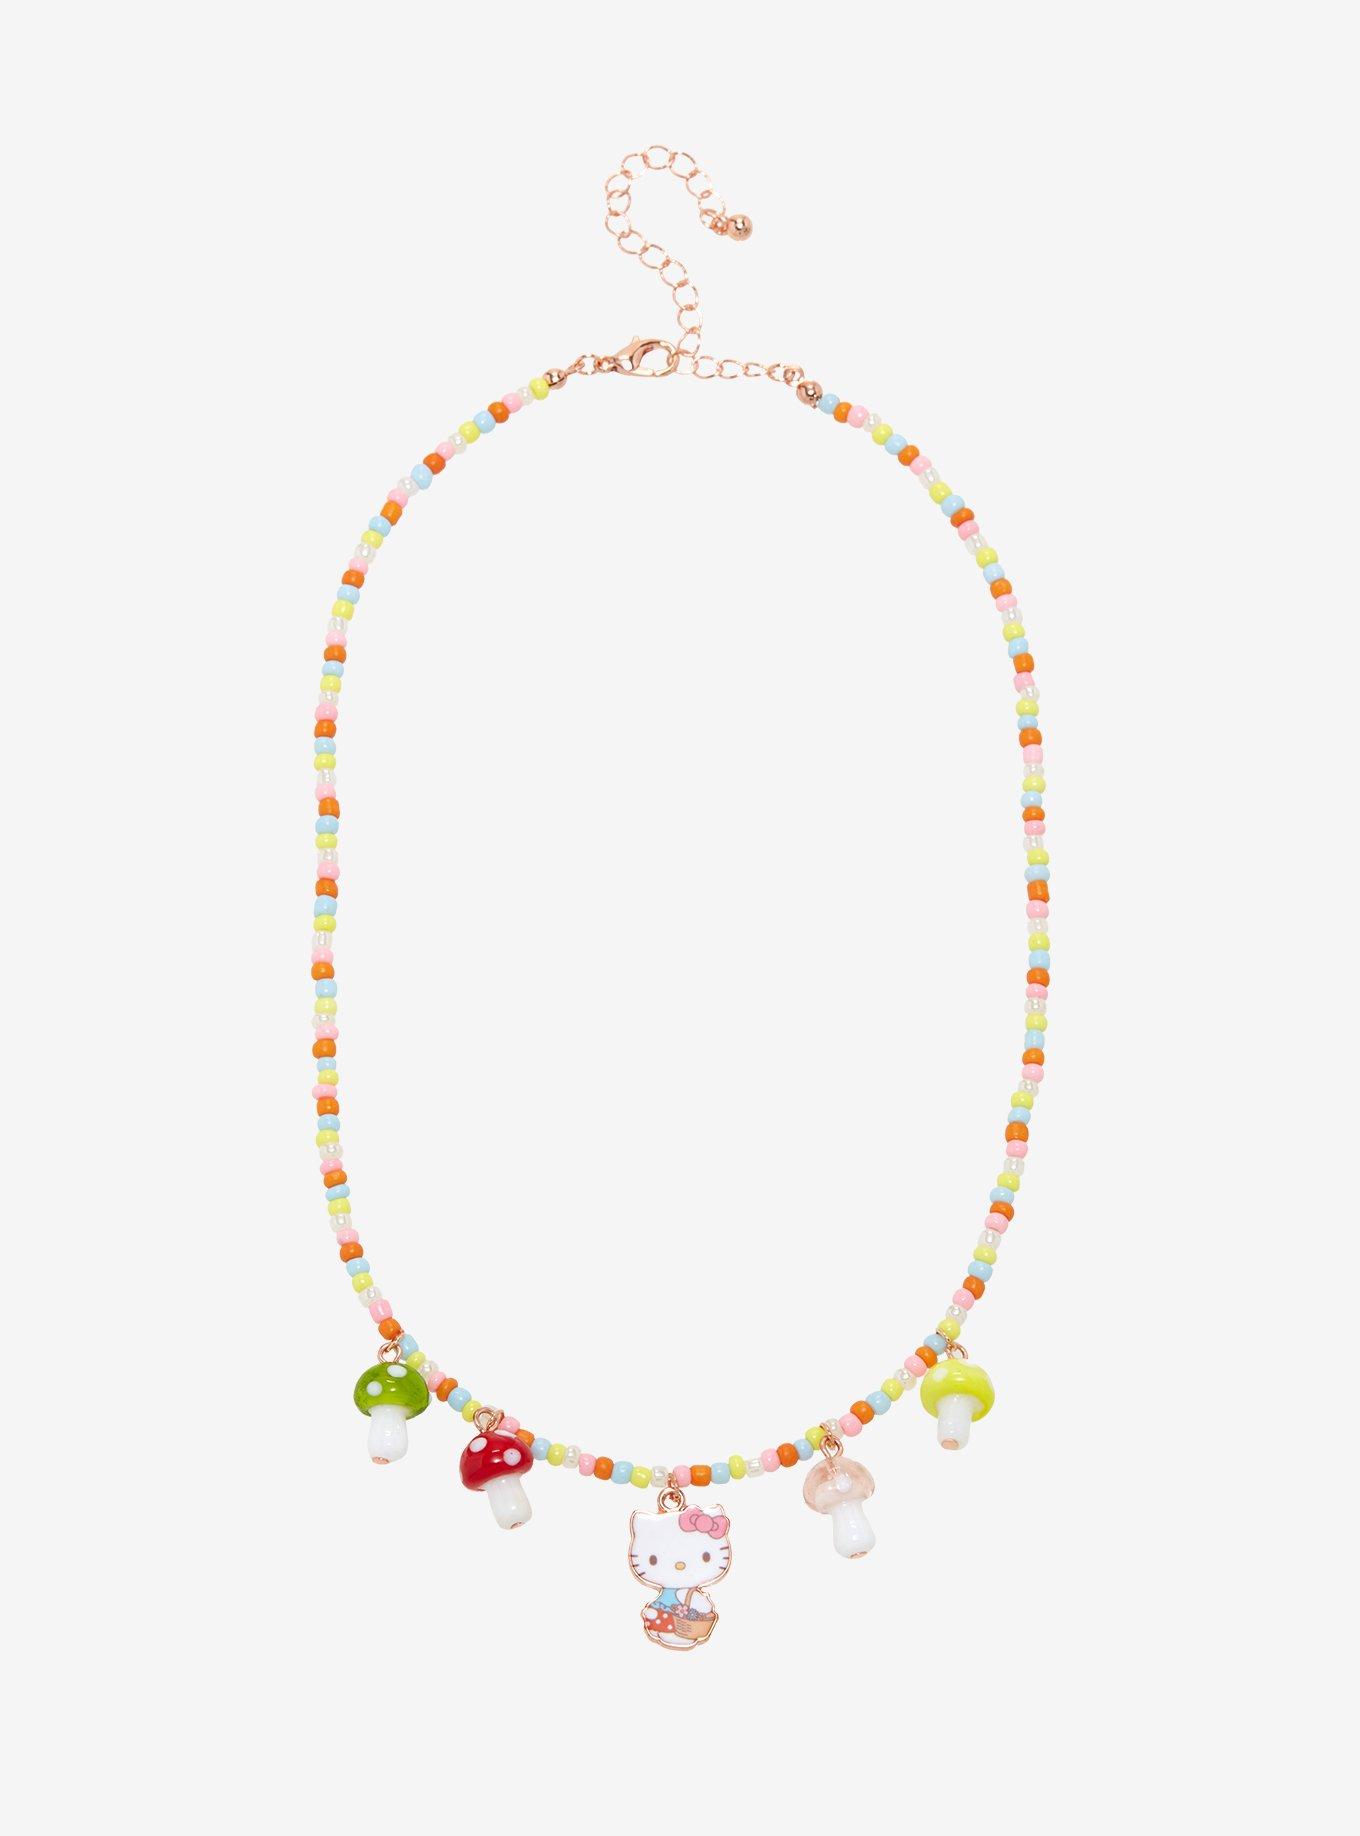 Hello Kitty And Friends Mushroom Beaded Charm Necklace